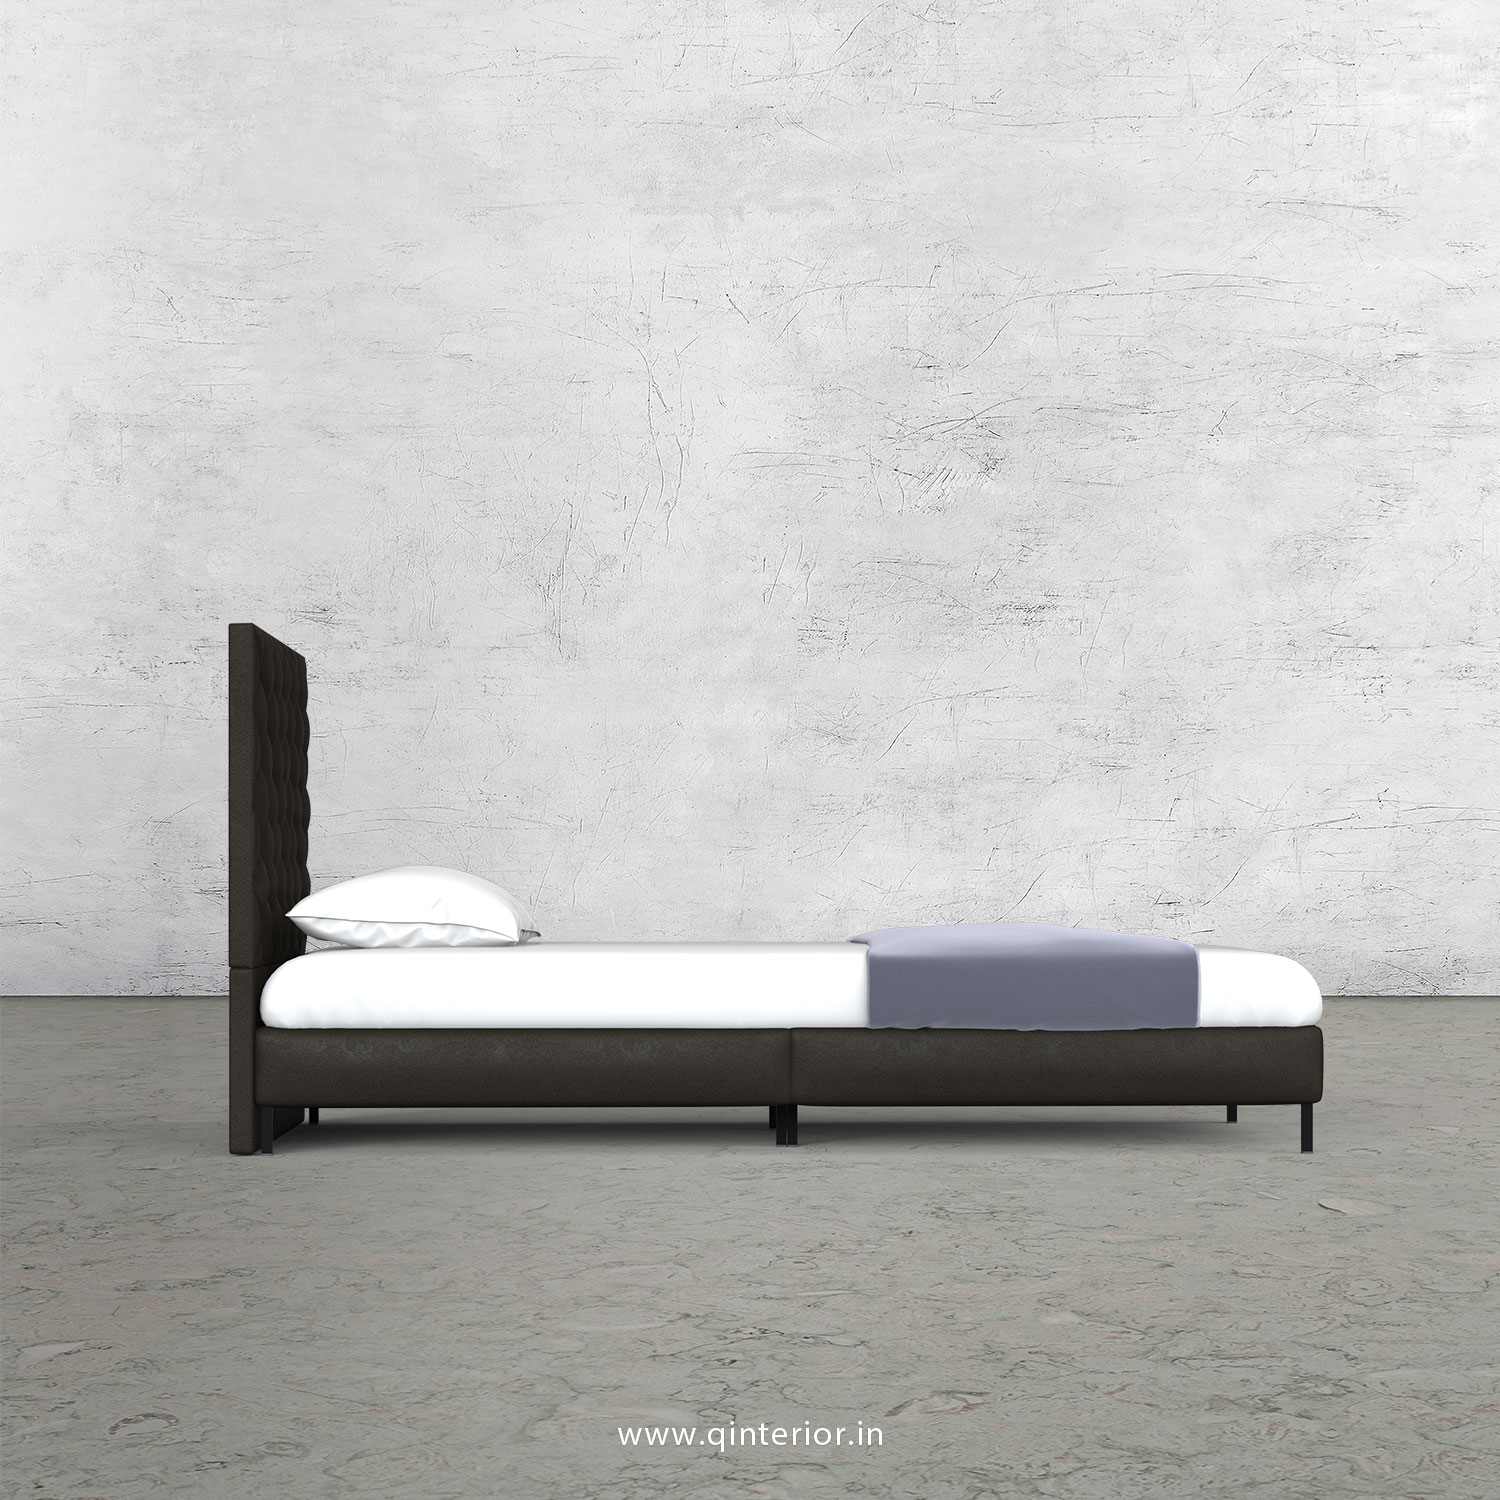 Aquila Single Bed in Fab Leather – SBD003 FL11